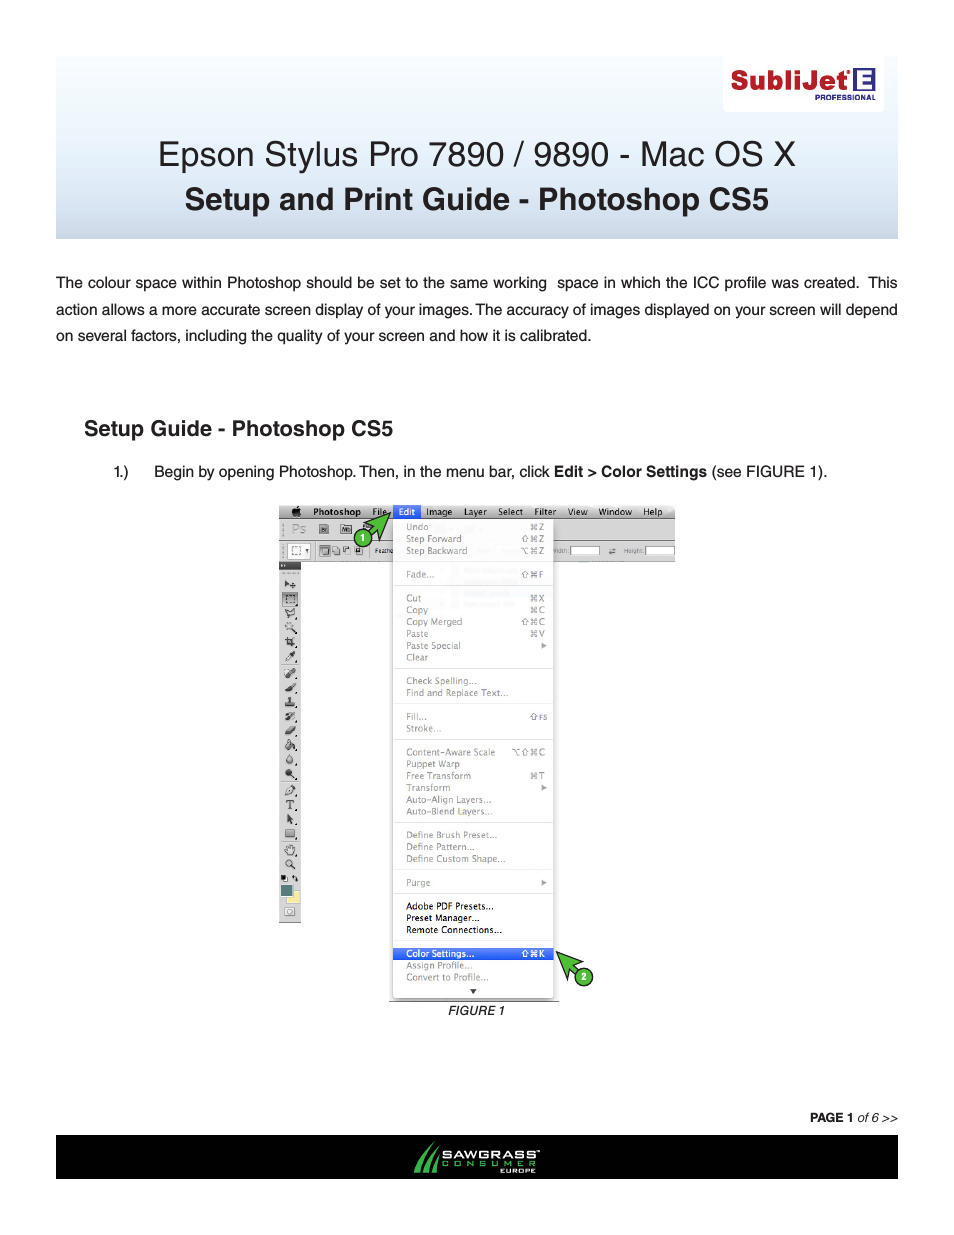 SubliJet E Epson Stylus Pro 9890 (Mac ICC Profile Setup): Print & Setup Guide Photoshop CS5